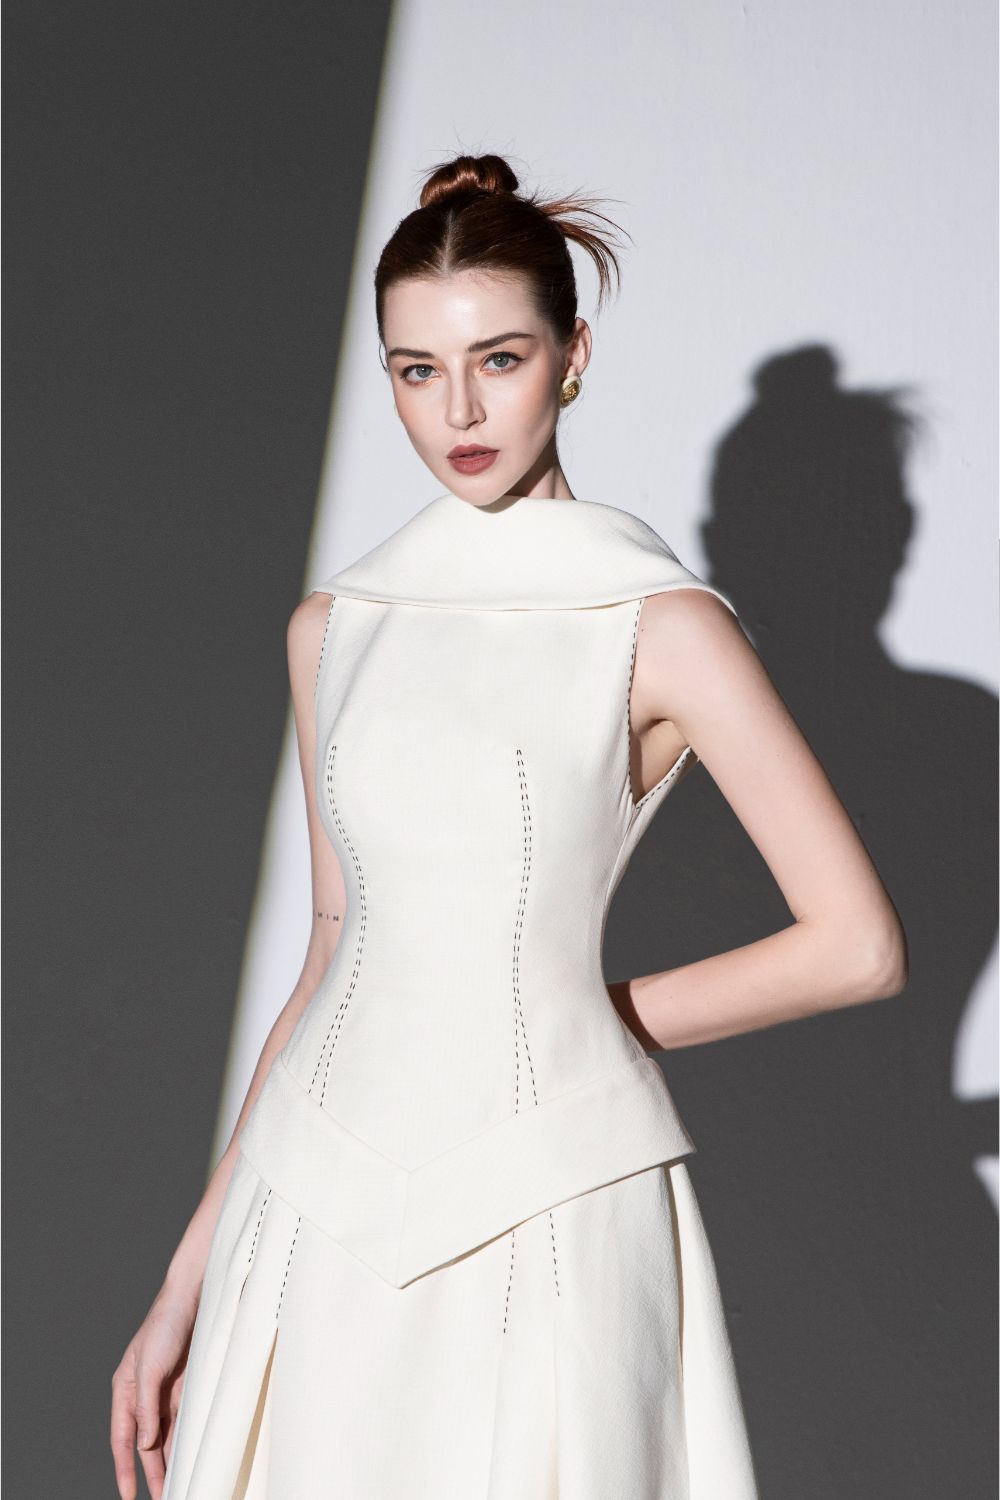 Lavina Craft Sleeveless Midi Dress